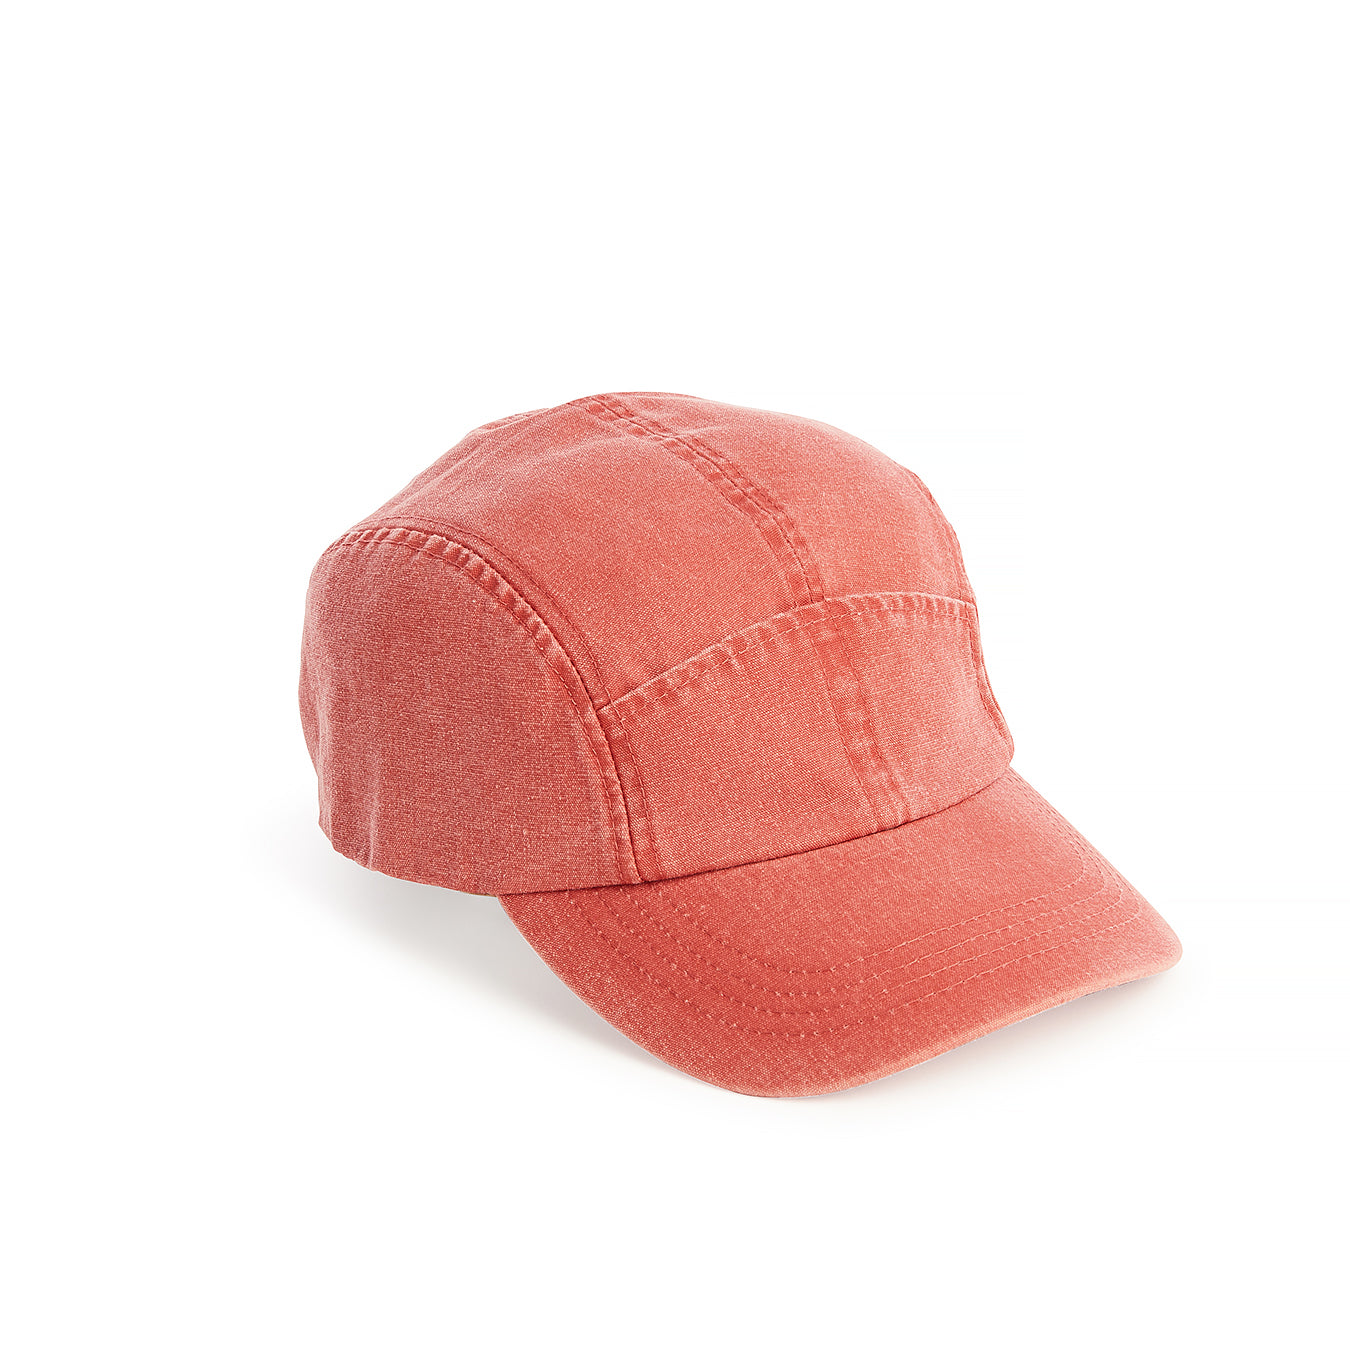 Nantucket Reds Collection®  Shovel Hat